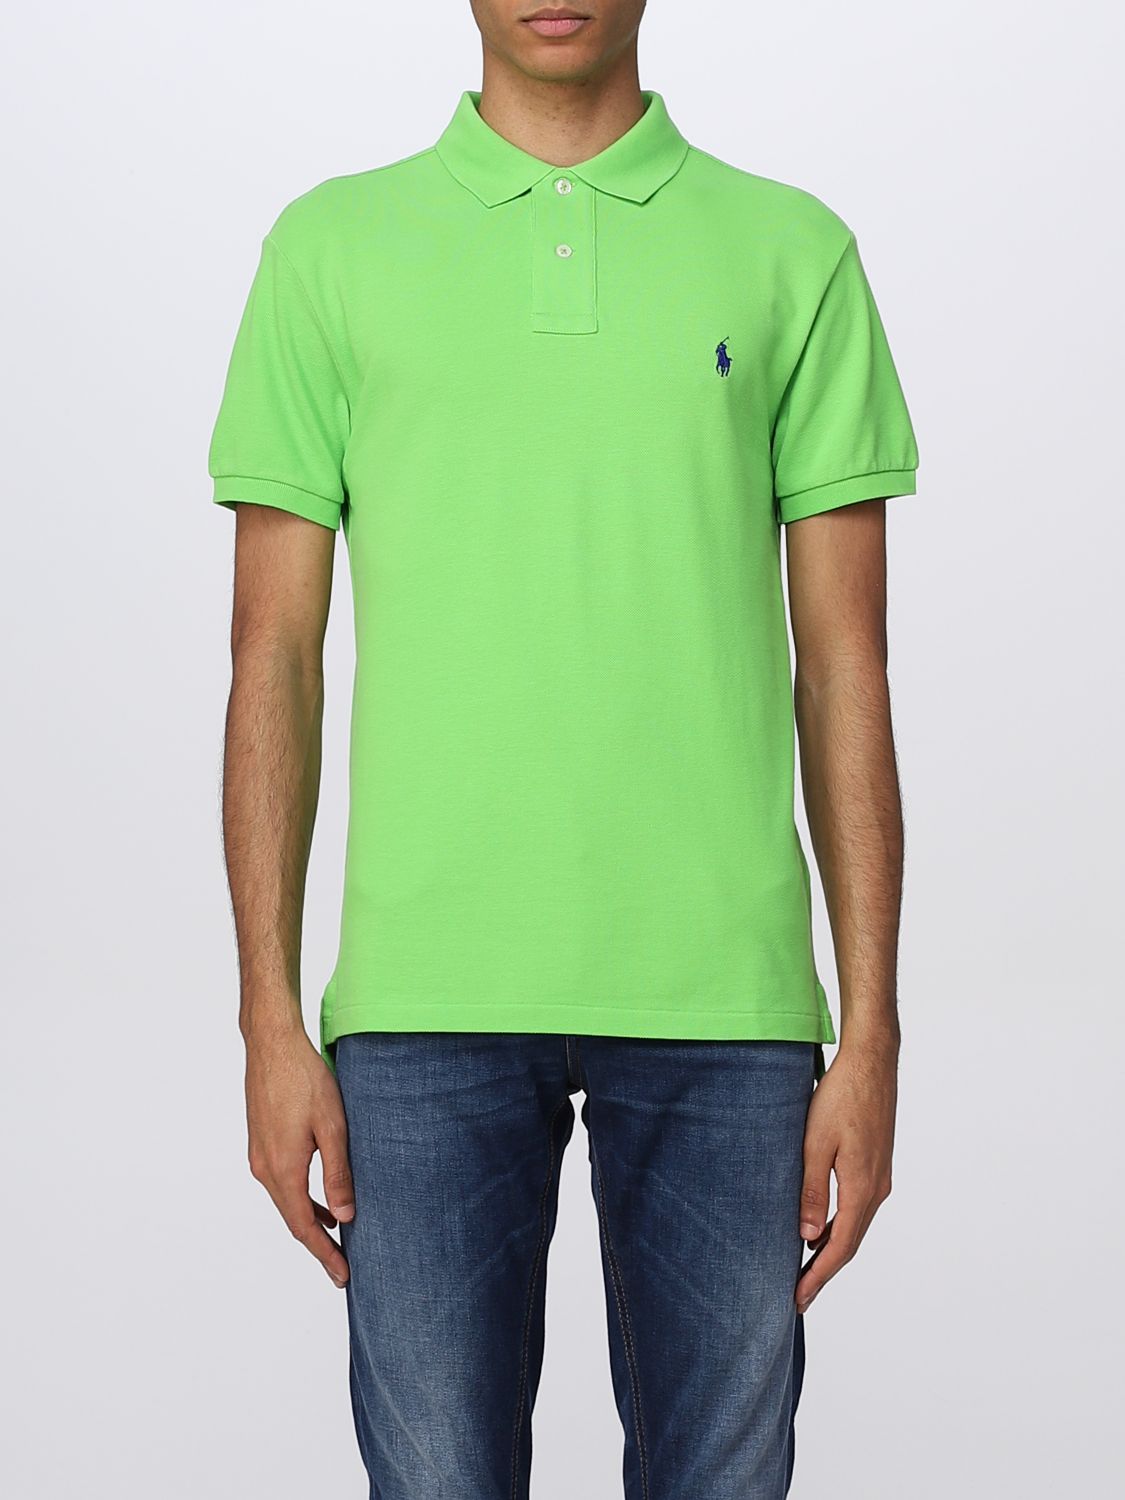 POLO RALPH LAUREN: polo shirt for man - Green | Polo Ralph Lauren polo shirt  710536856 online on 